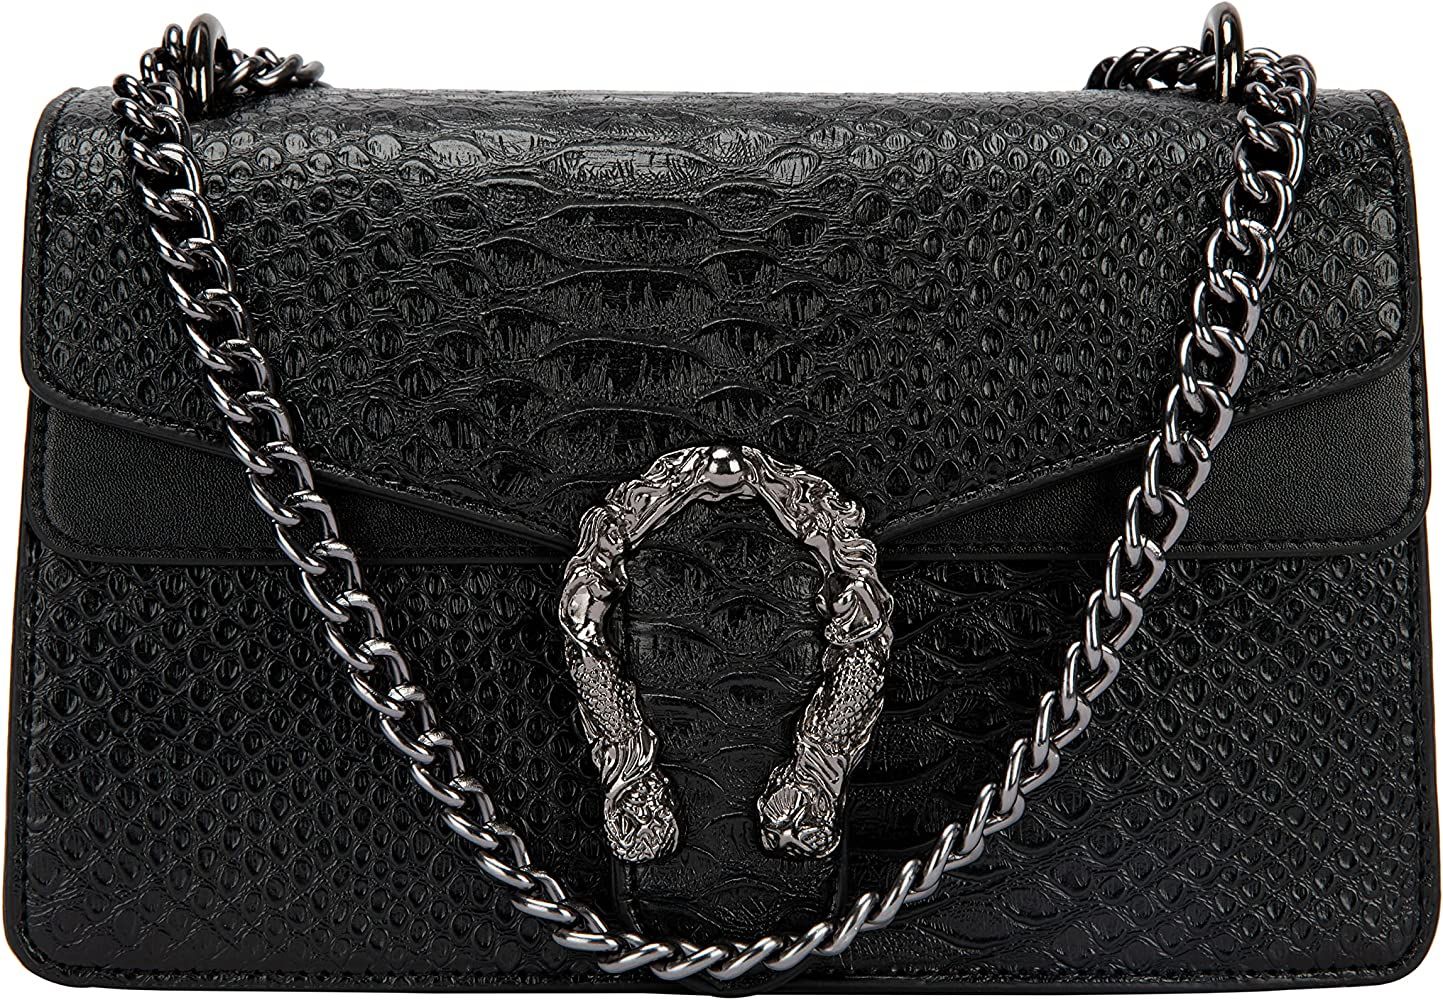 Crossbody Shoulder Square Purse For Women - Fashion Embossed Snake-Print Leather Handbag Metal Chain | Amazon (US)